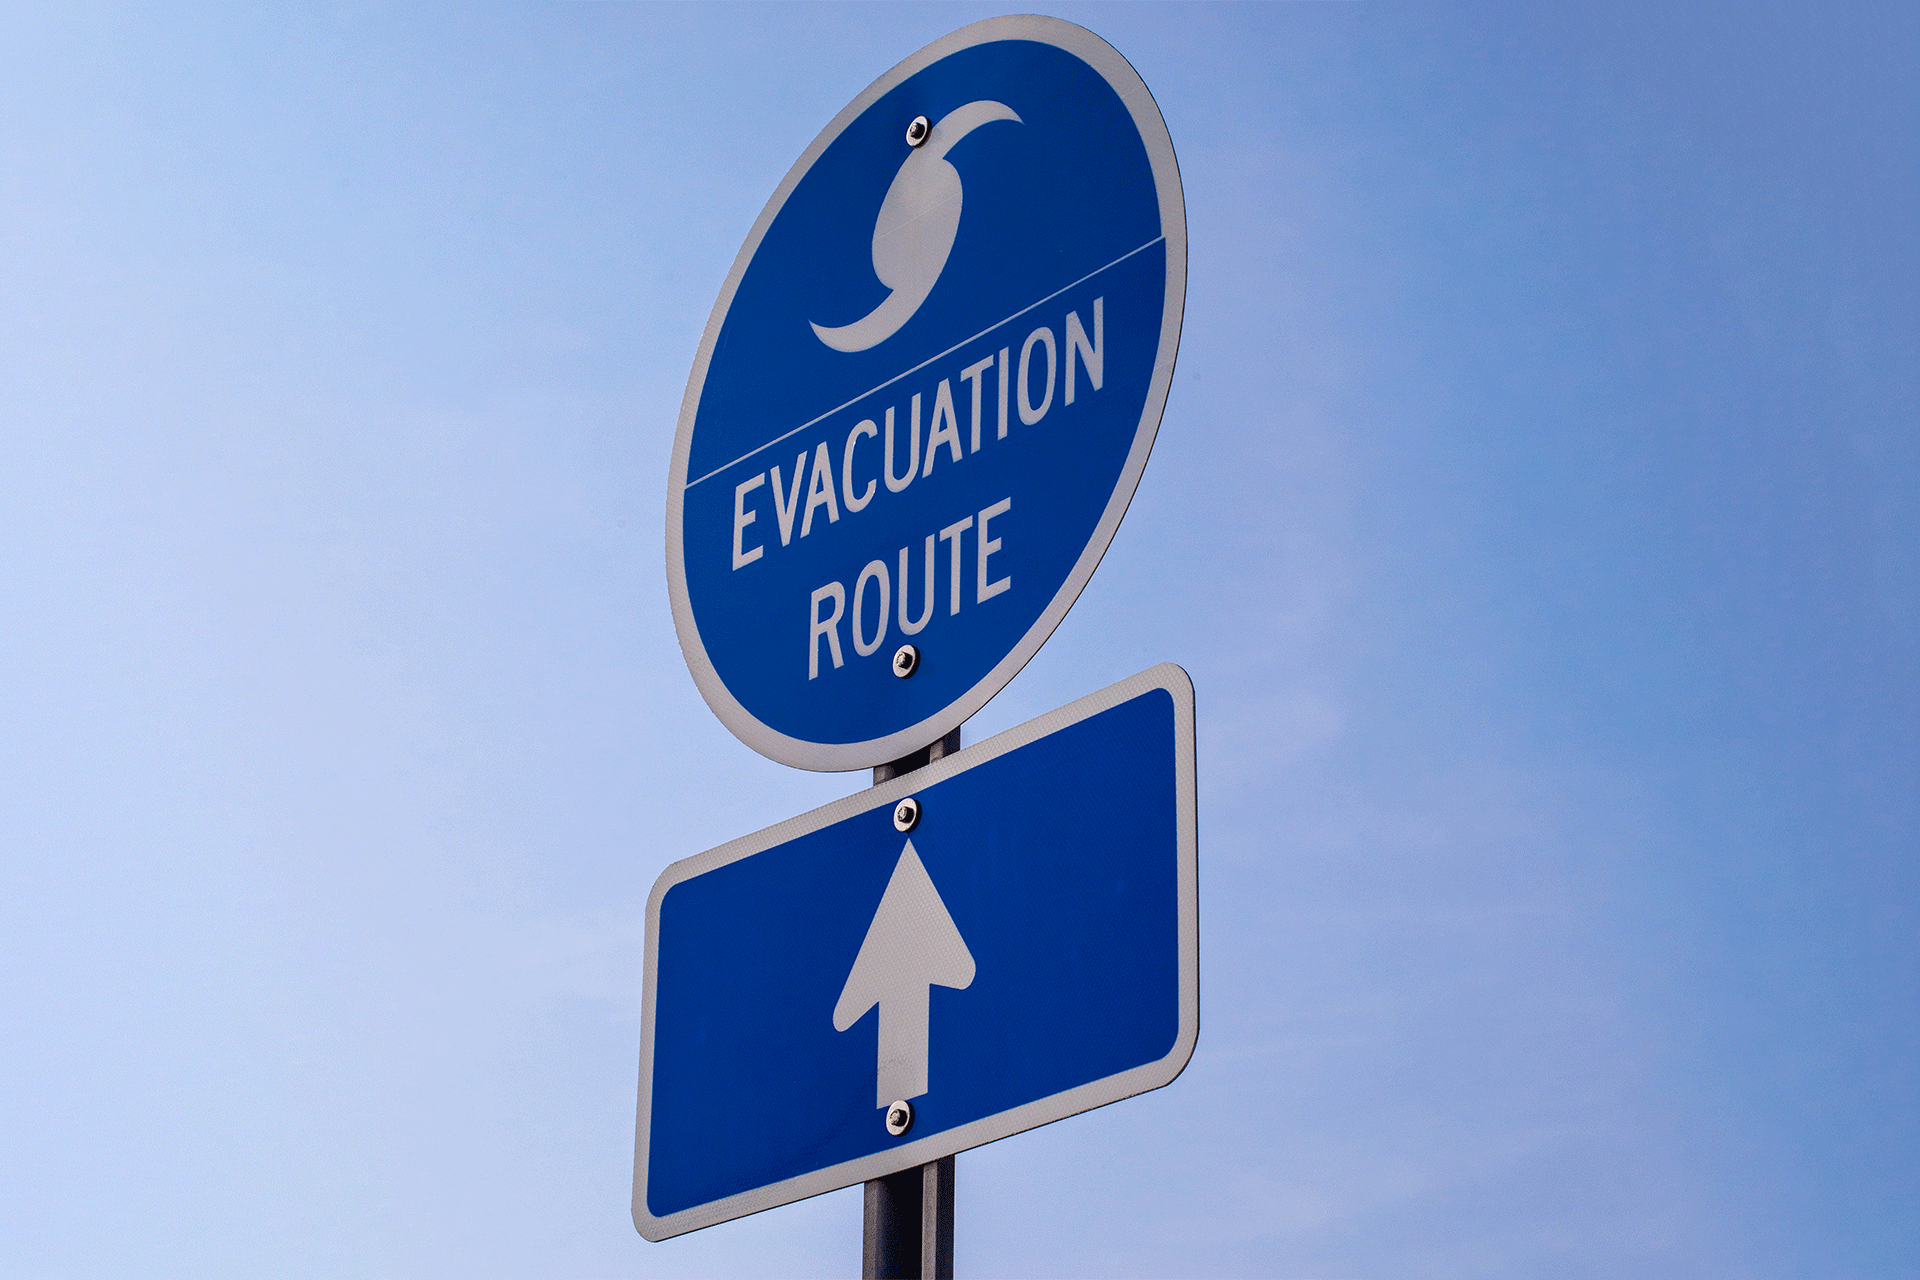 hurricane evacuation route